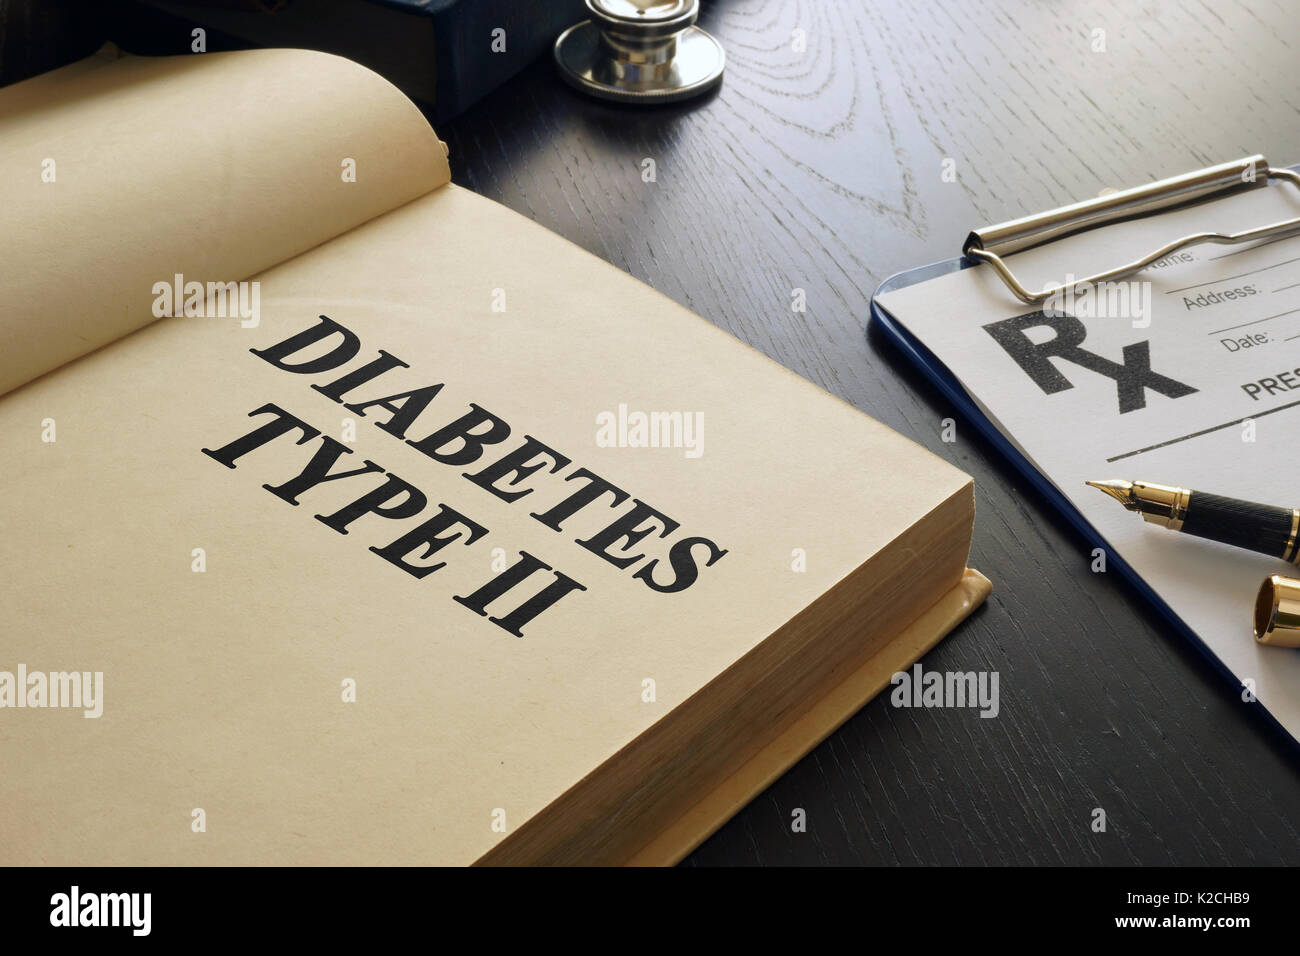 Diabetes mellitus type 2 written in a book. Stock Photo